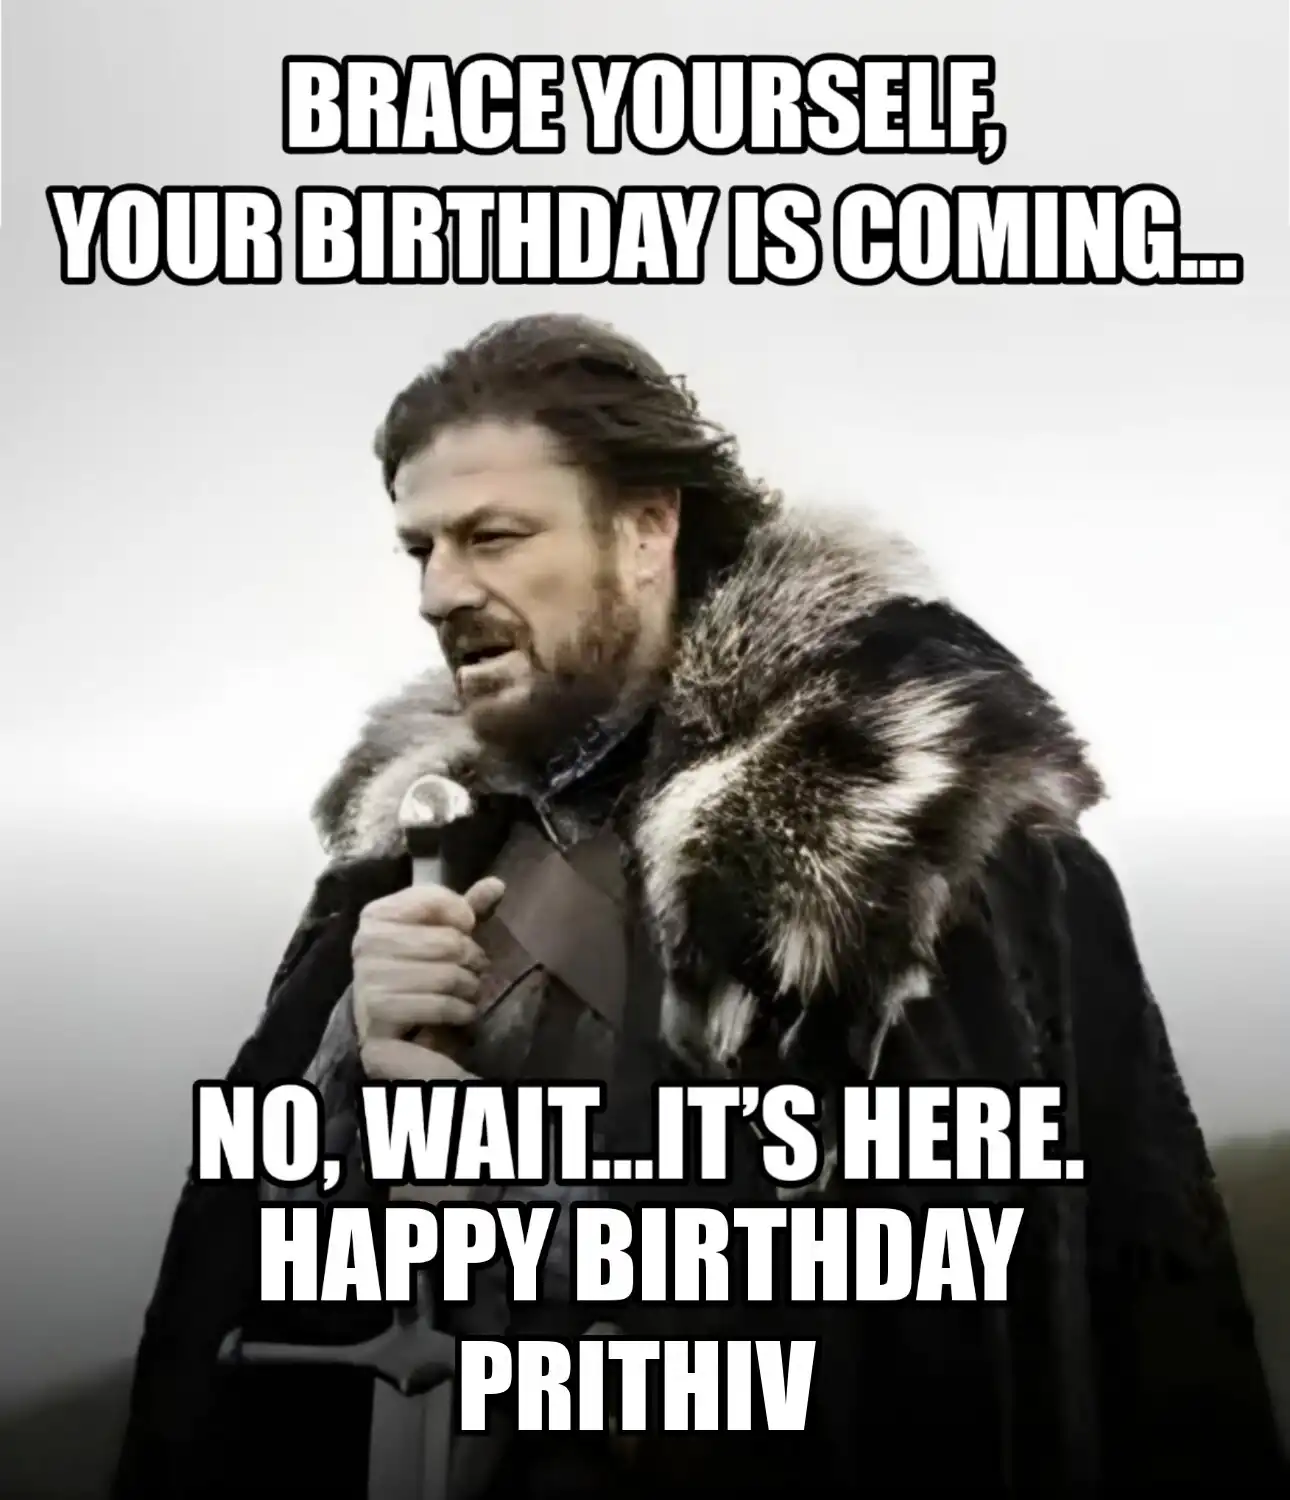 Happy Birthday Prithiv Brace Yourself Your Birthday Is Coming Meme